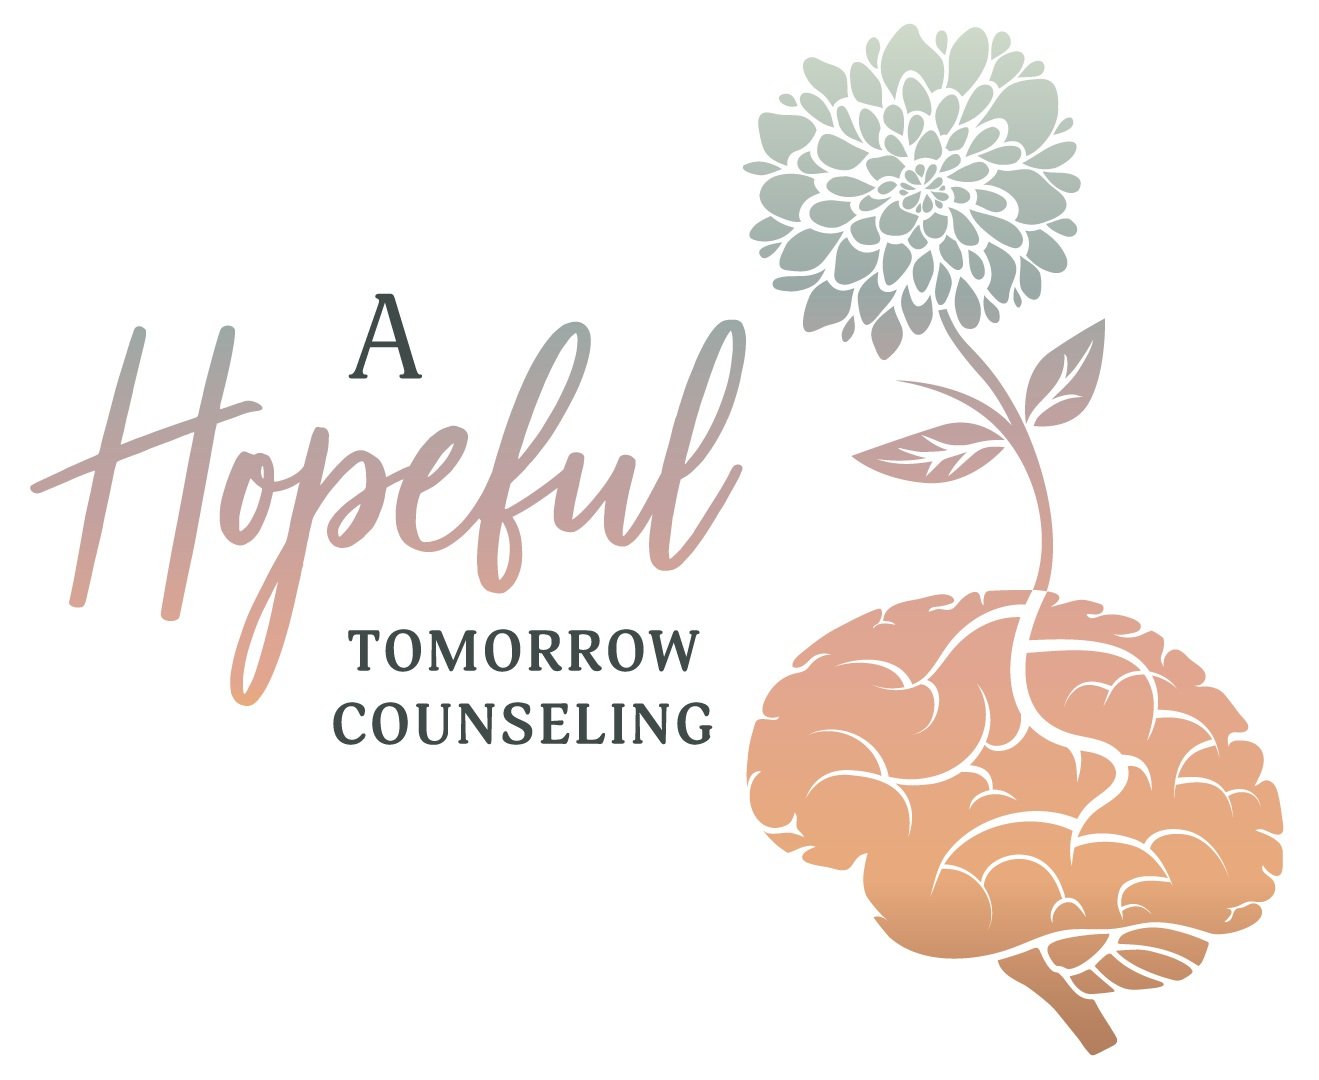 A Hopeful Tomorrow Counseling